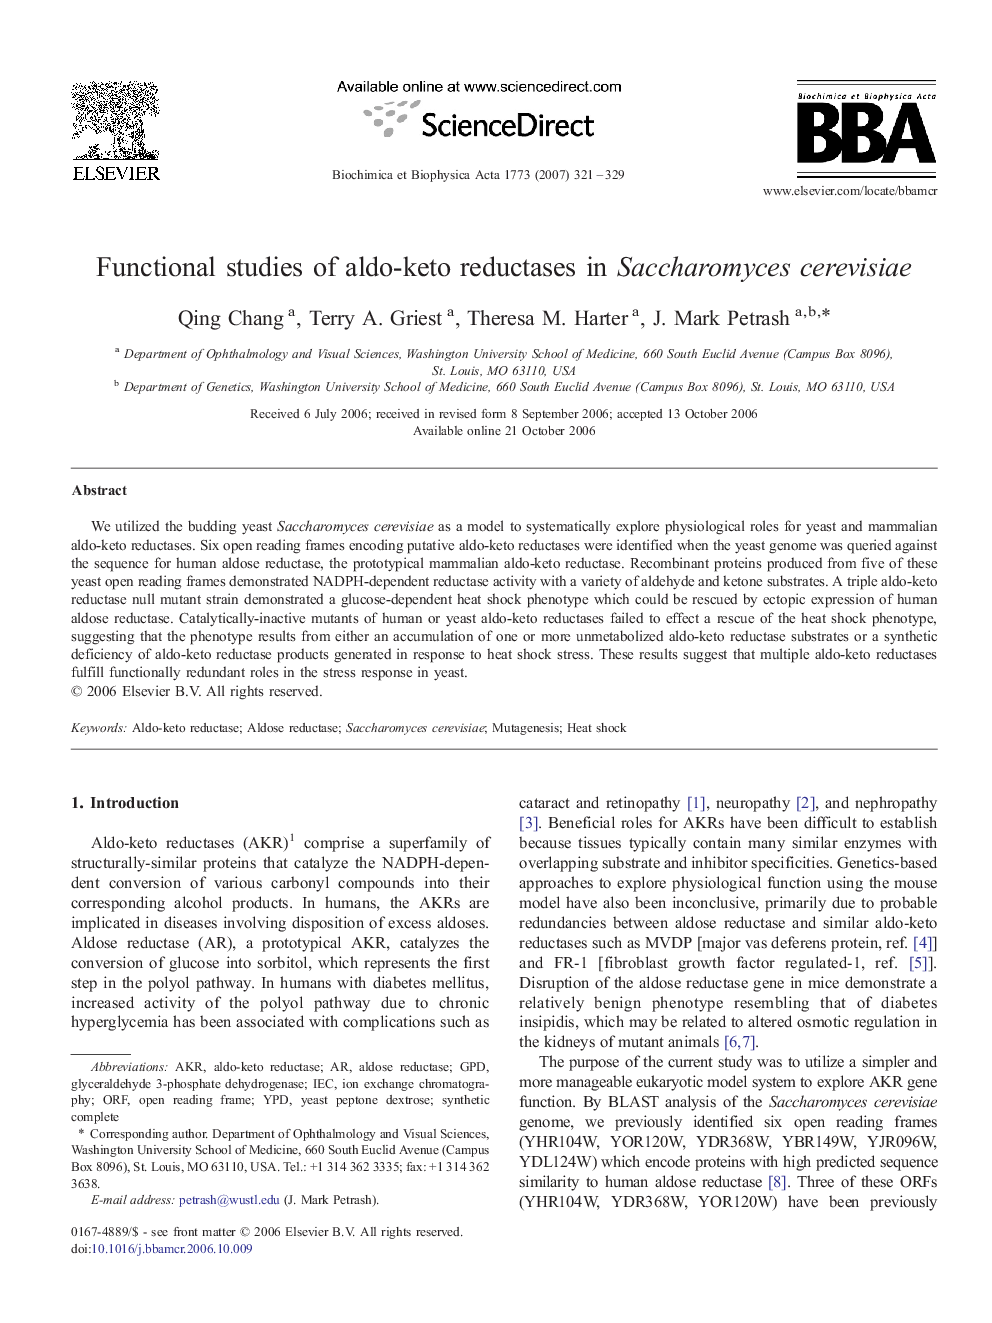 Functional studies of aldo-keto reductases in Saccharomyces cerevisiae